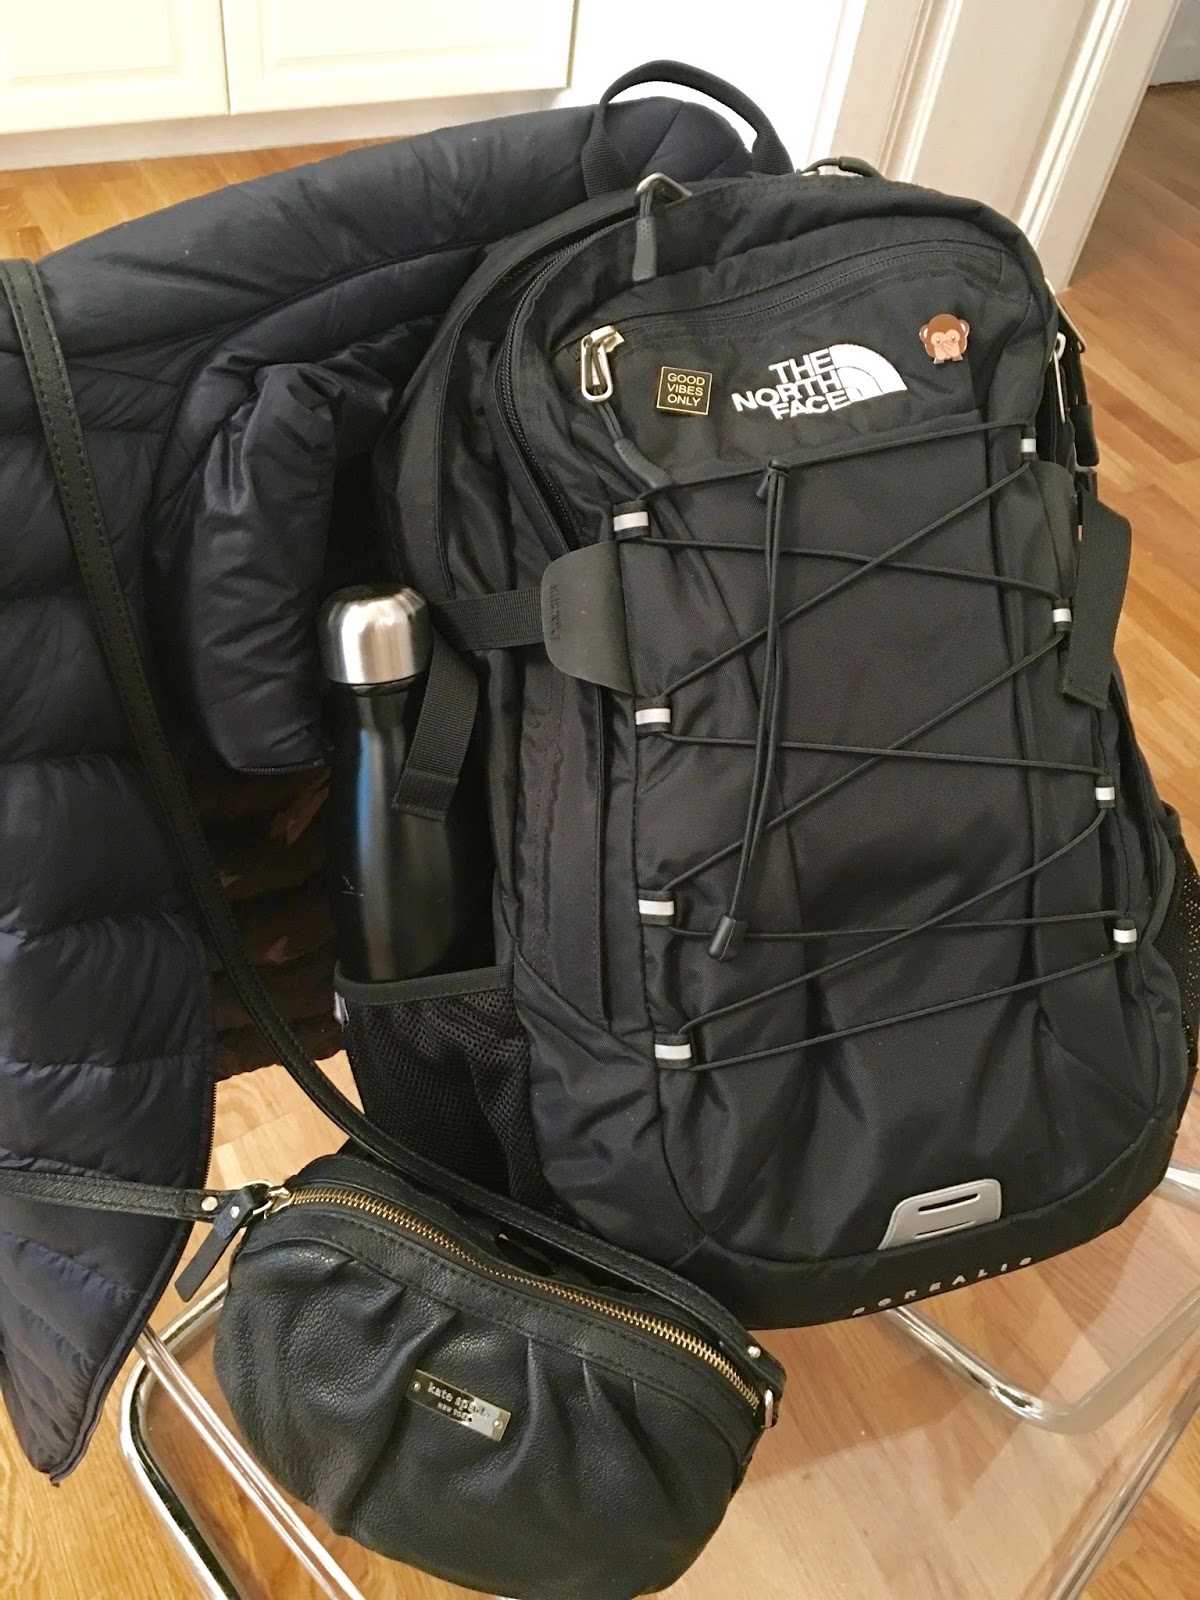 impossible jen: minimal-ish travel beauty bag